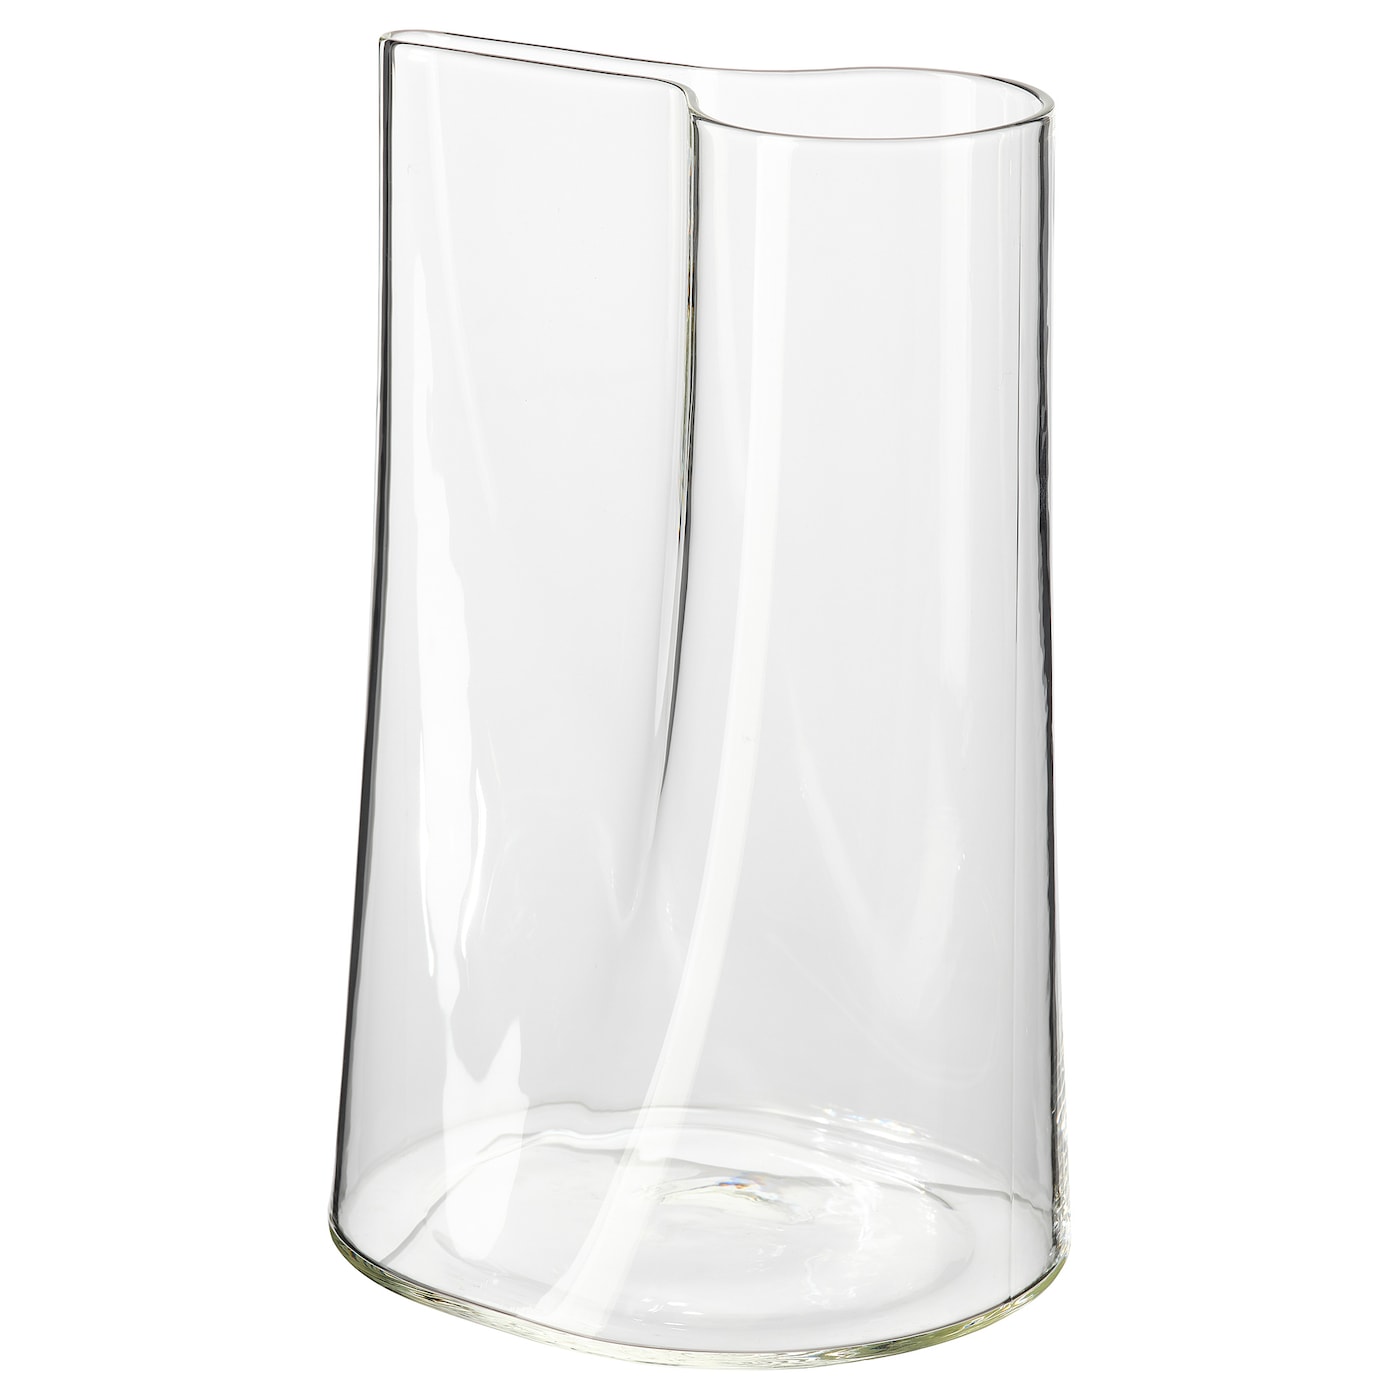 CHILIFRUKT ЧИЛИФРУКТ Ваза/лейка, прозрачное стекло, 21 см IKEA ваза для цветов грация 8 марта